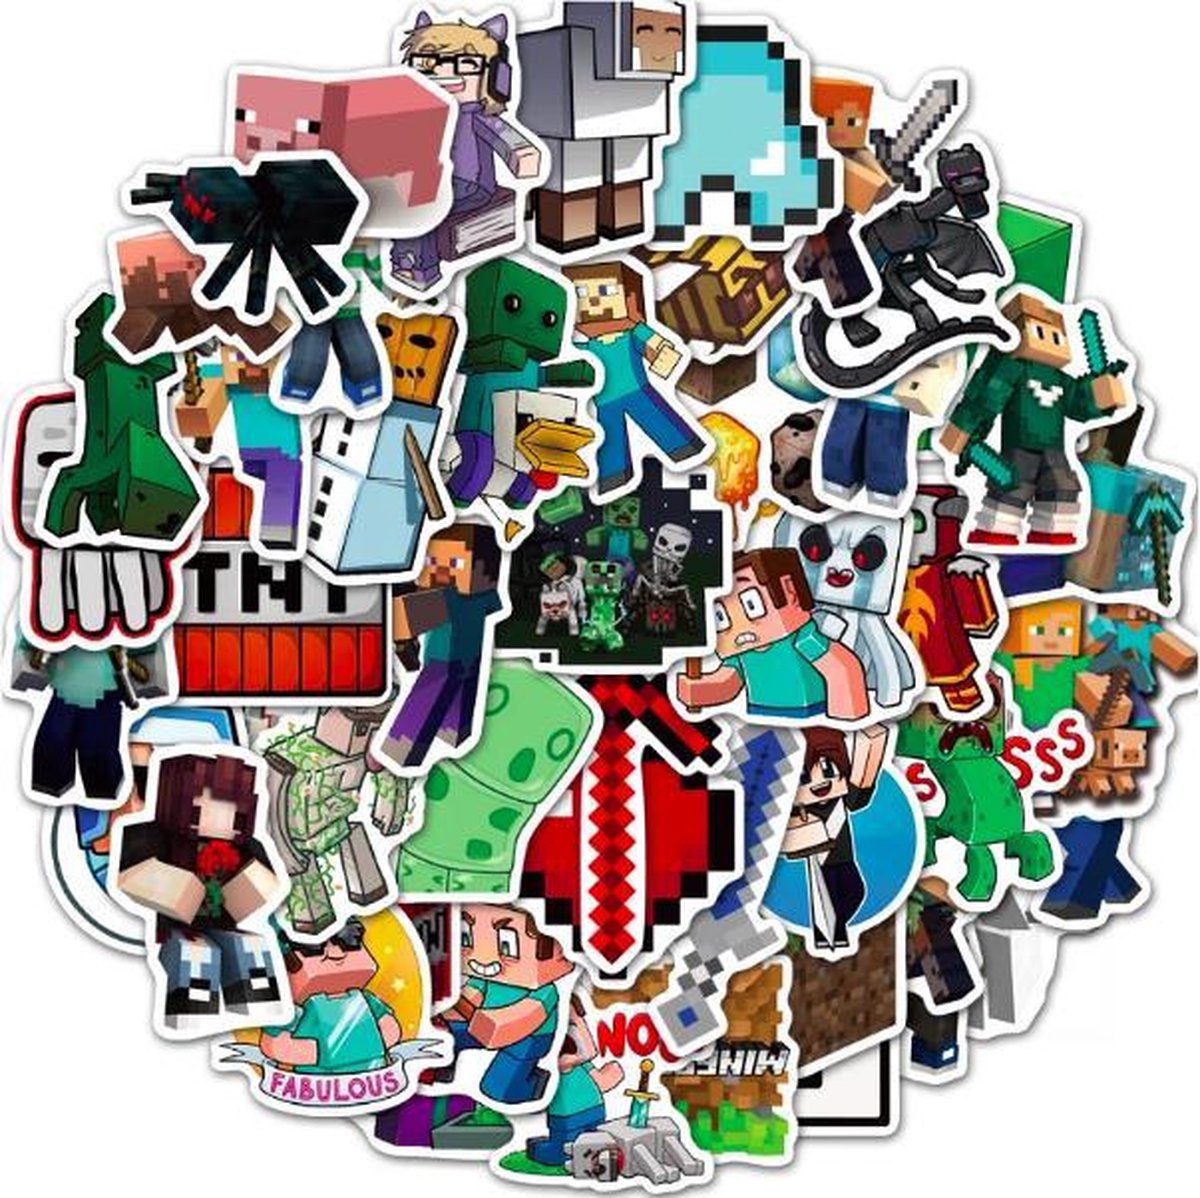 ProductGoods - 50 Stuks Minecraft Stickers - Muur Decoratie - Koffer Decoratie - Laptop Decoratie - Koelkast Decoratie - Stickervellen - Minecraft - ProductGoods